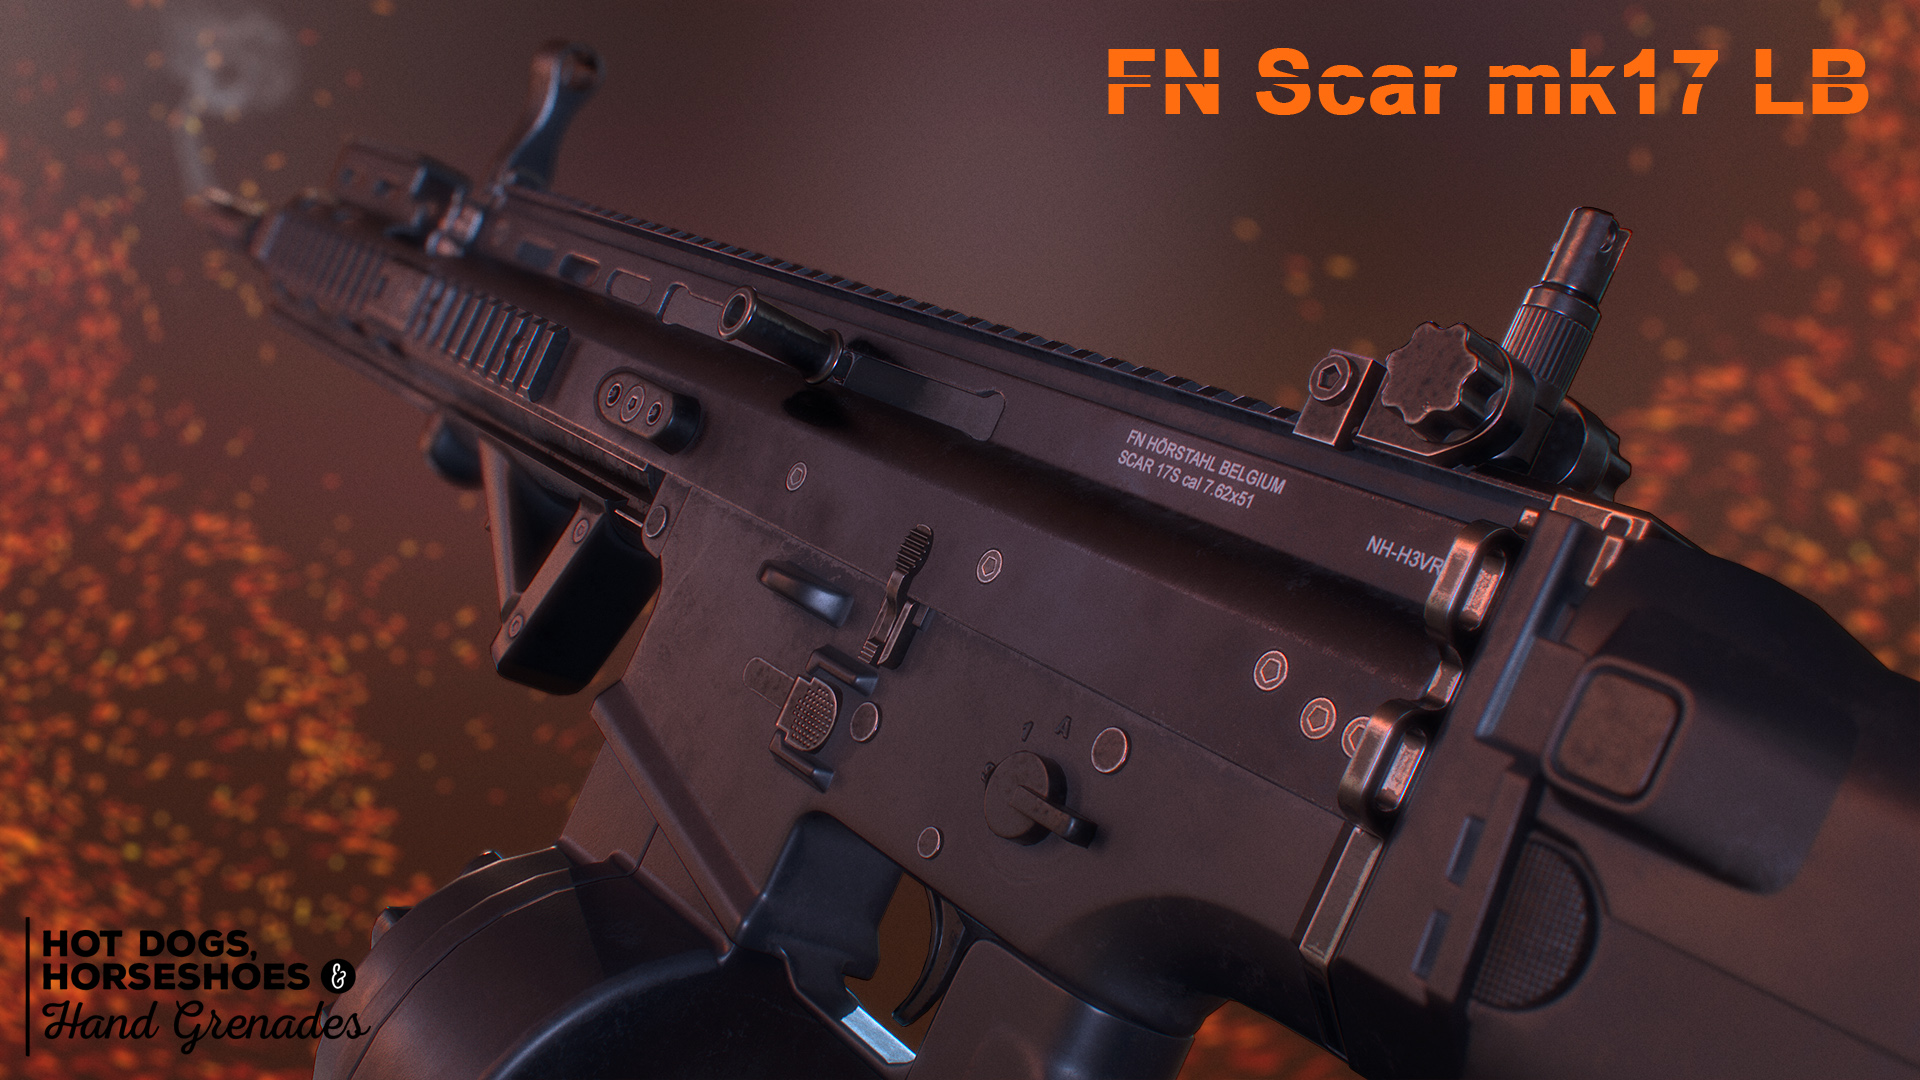 FN Scar mk17 LB